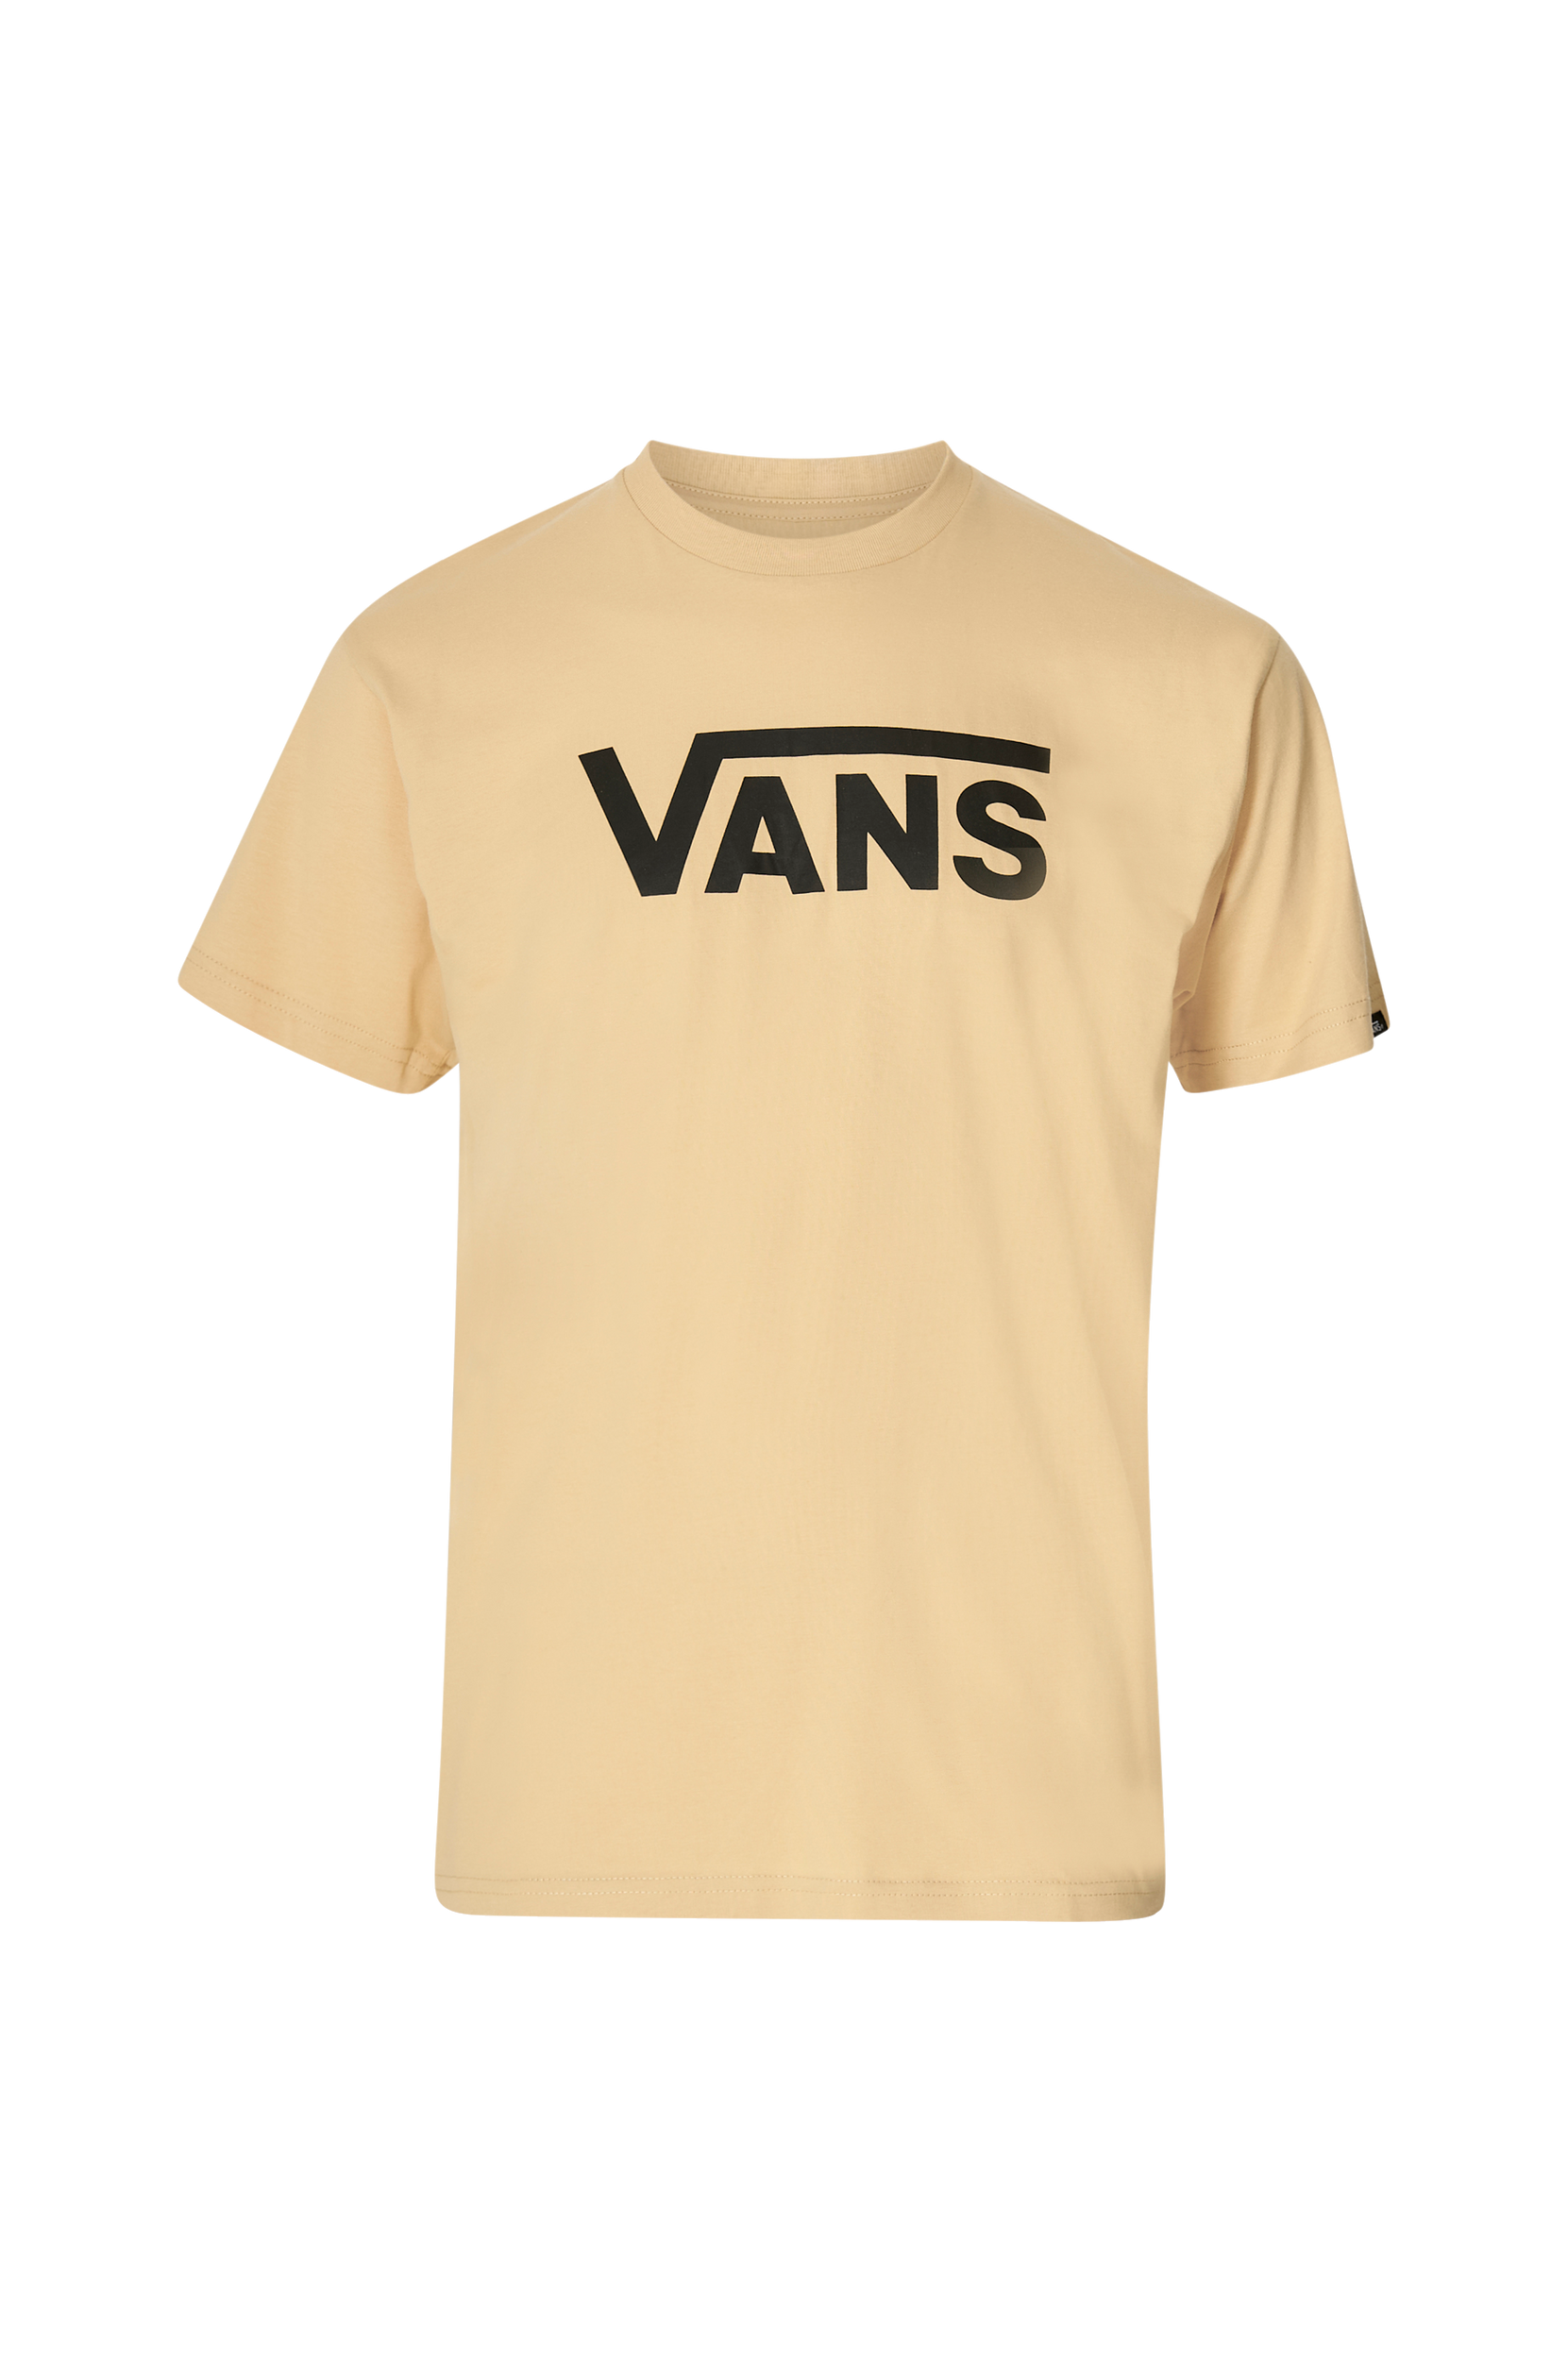 Vans - T-shirt MN Vans Classic - Beige - L